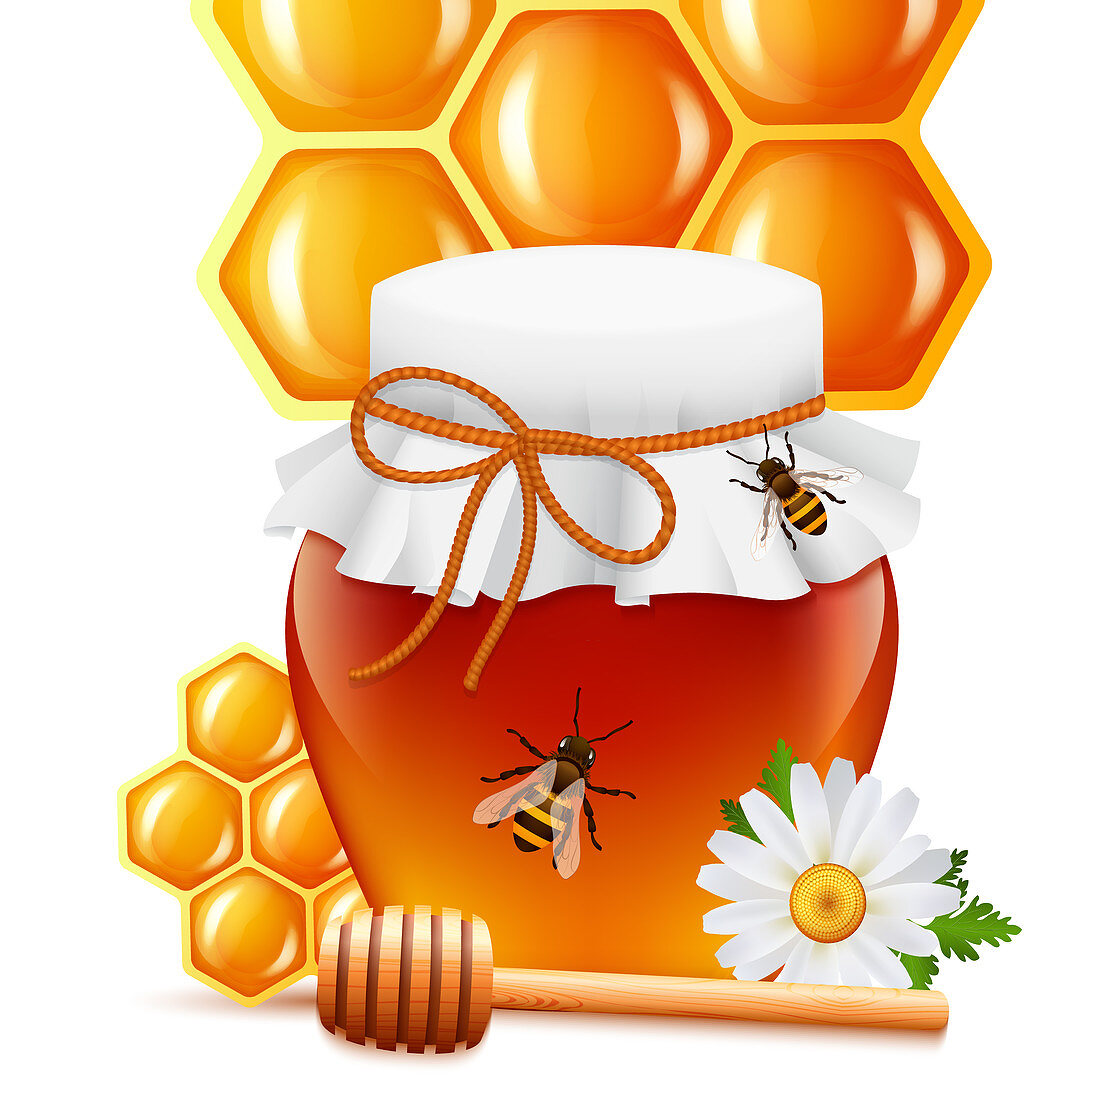 Honey, illustration